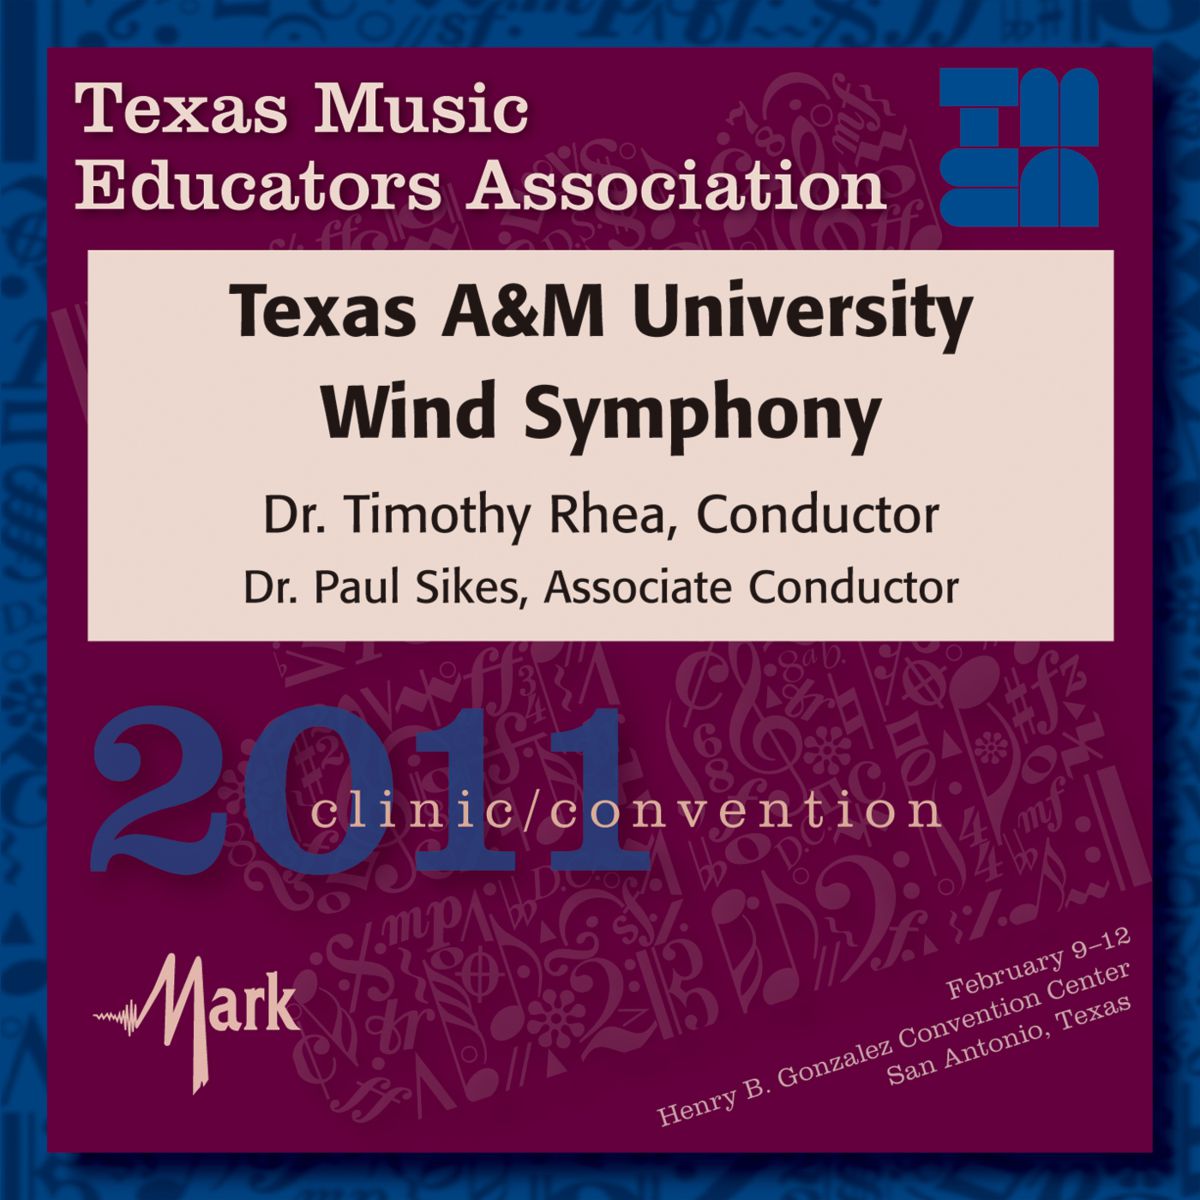 2011 Texas Music Educators Association: Texas A&M Wind Symphony - click here